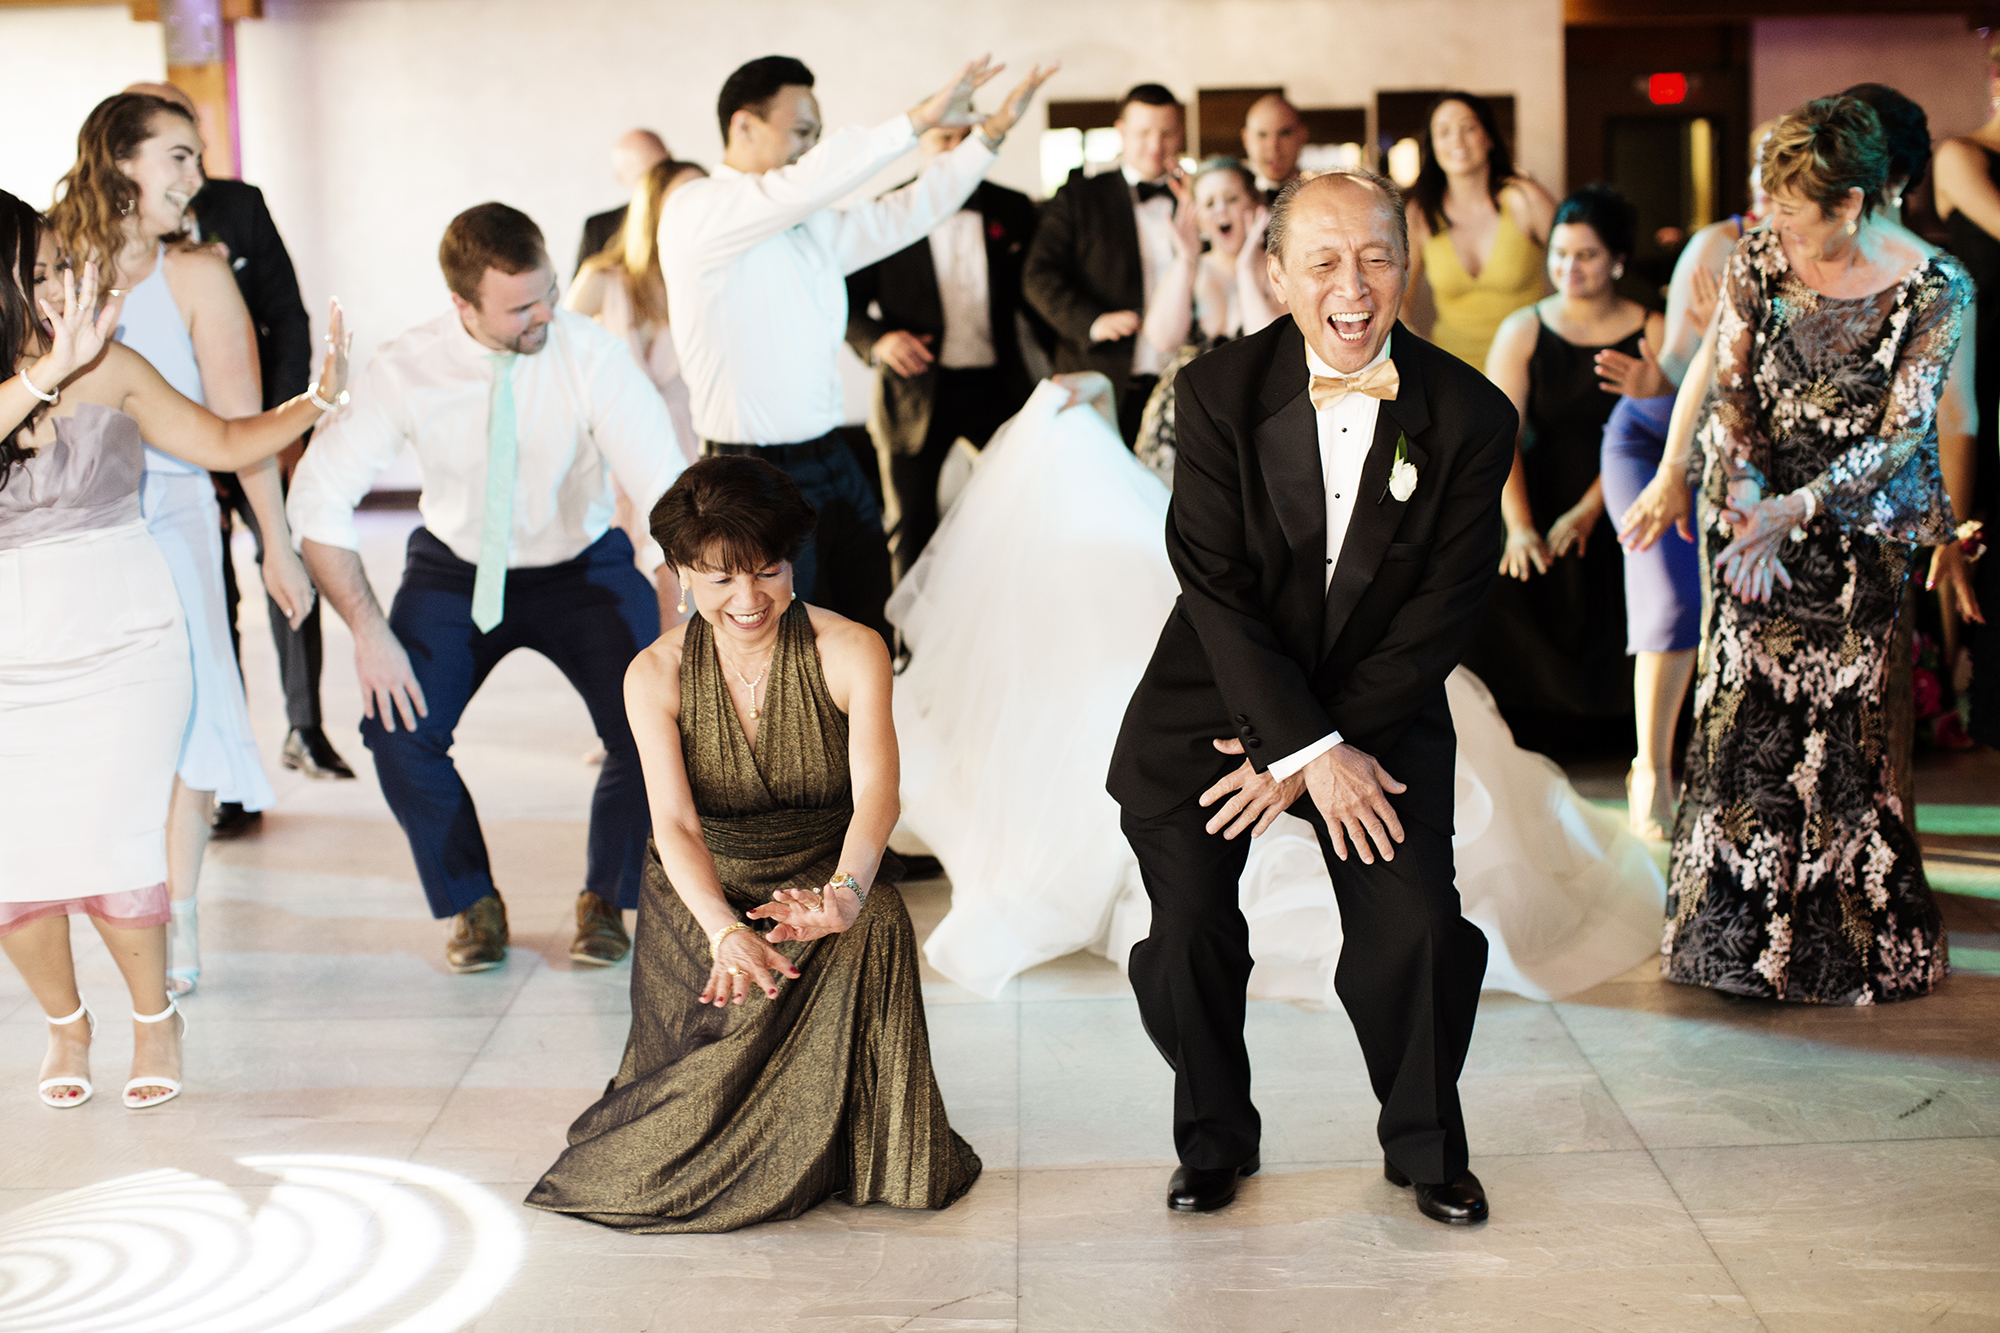 A'bulae Event Center Wedding Photos | Photography by Photogen Inc. | Eliesa Johnson | Based in Minneapolis, Minnesota